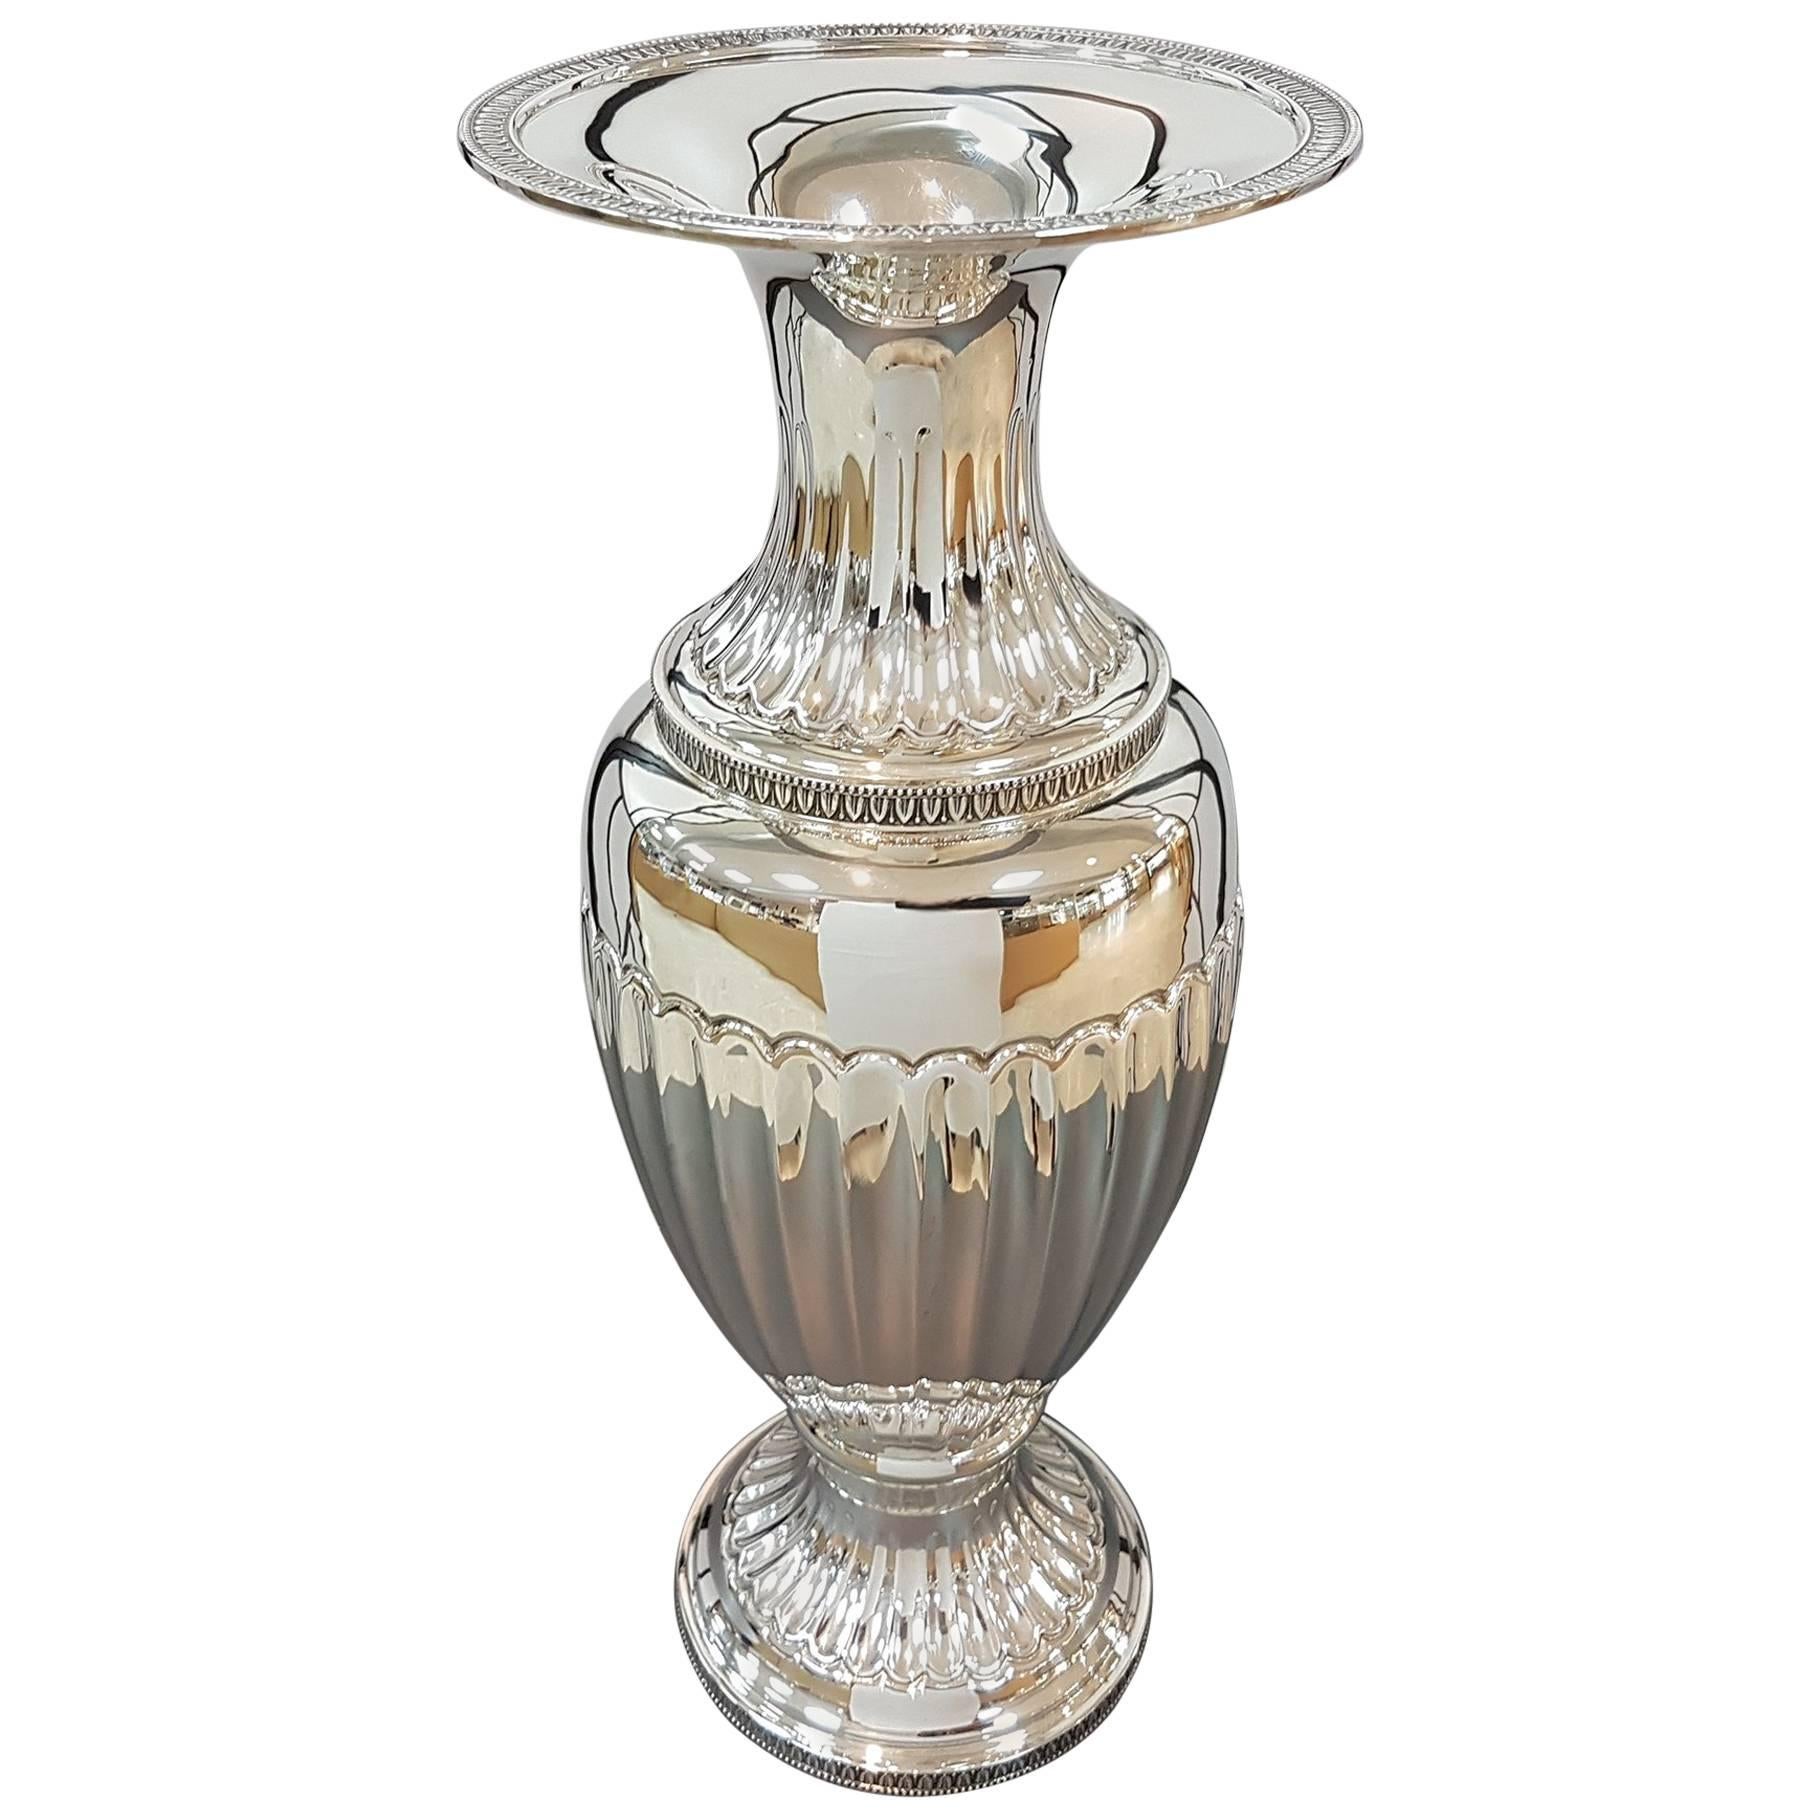 20th Century Empire Revival Italian Silver Vase